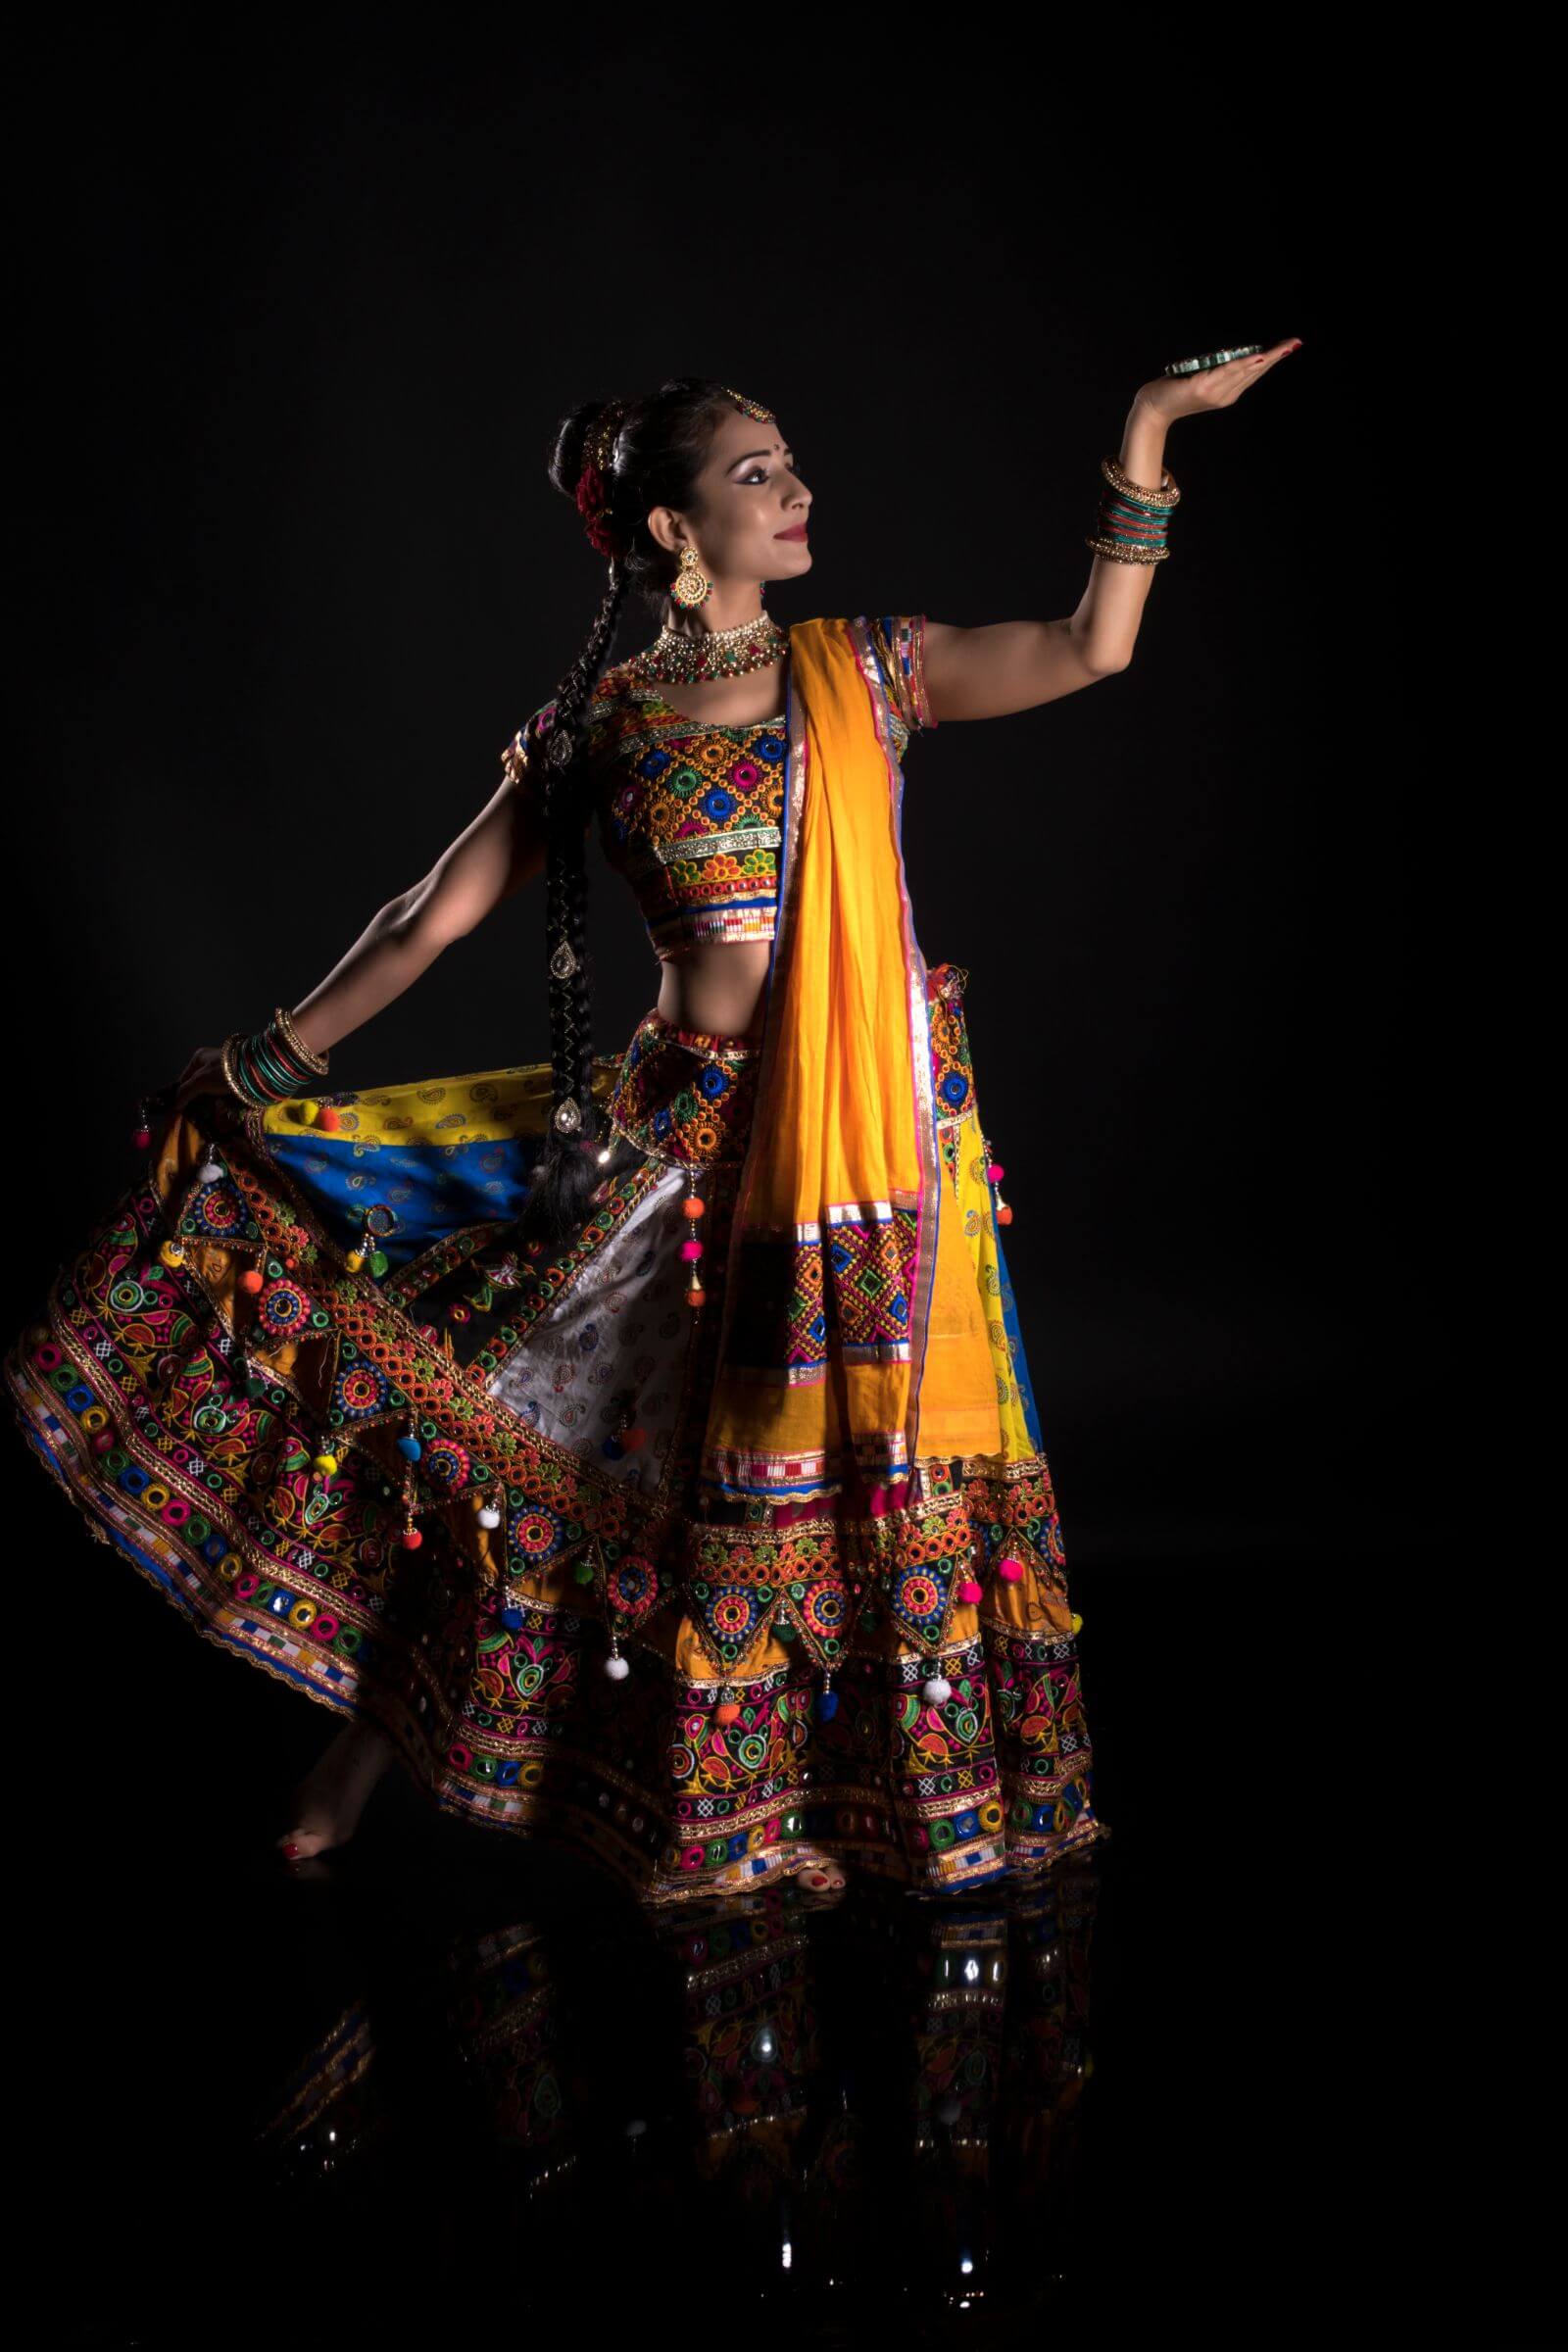 Kritika Khatur is a Indian Dancer and Artistic Performer